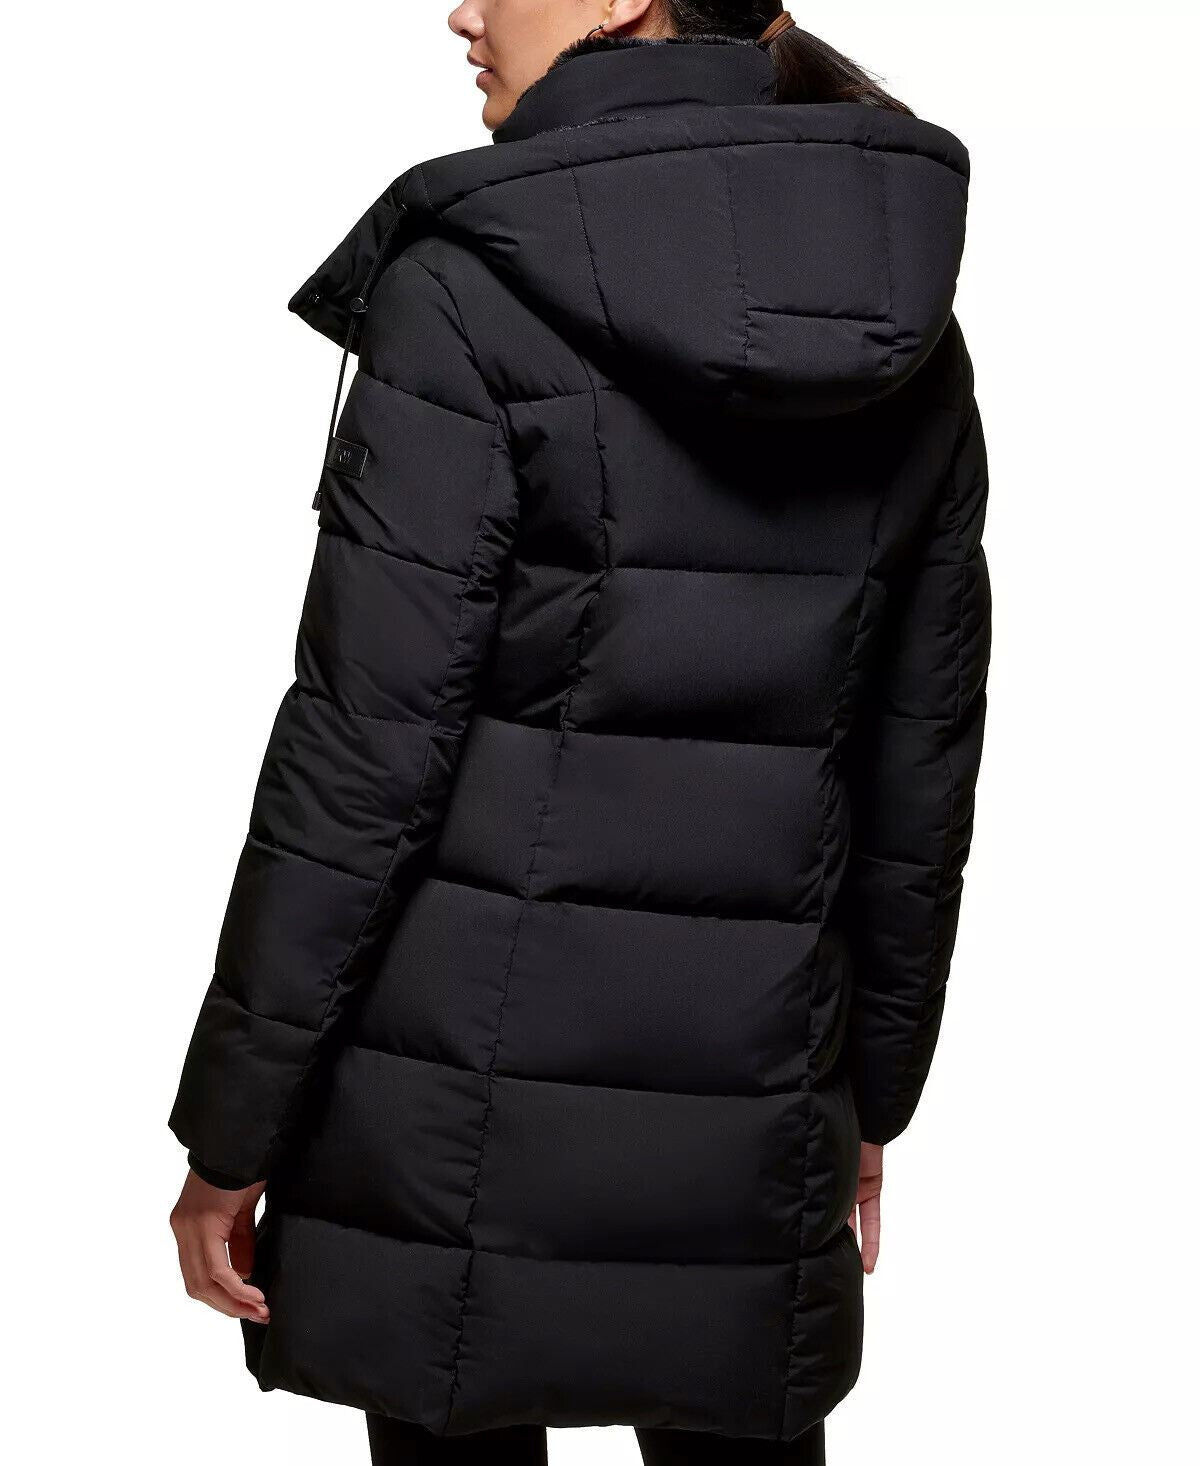 Dkny Womens Zip Puffer Coat Small Solid Black